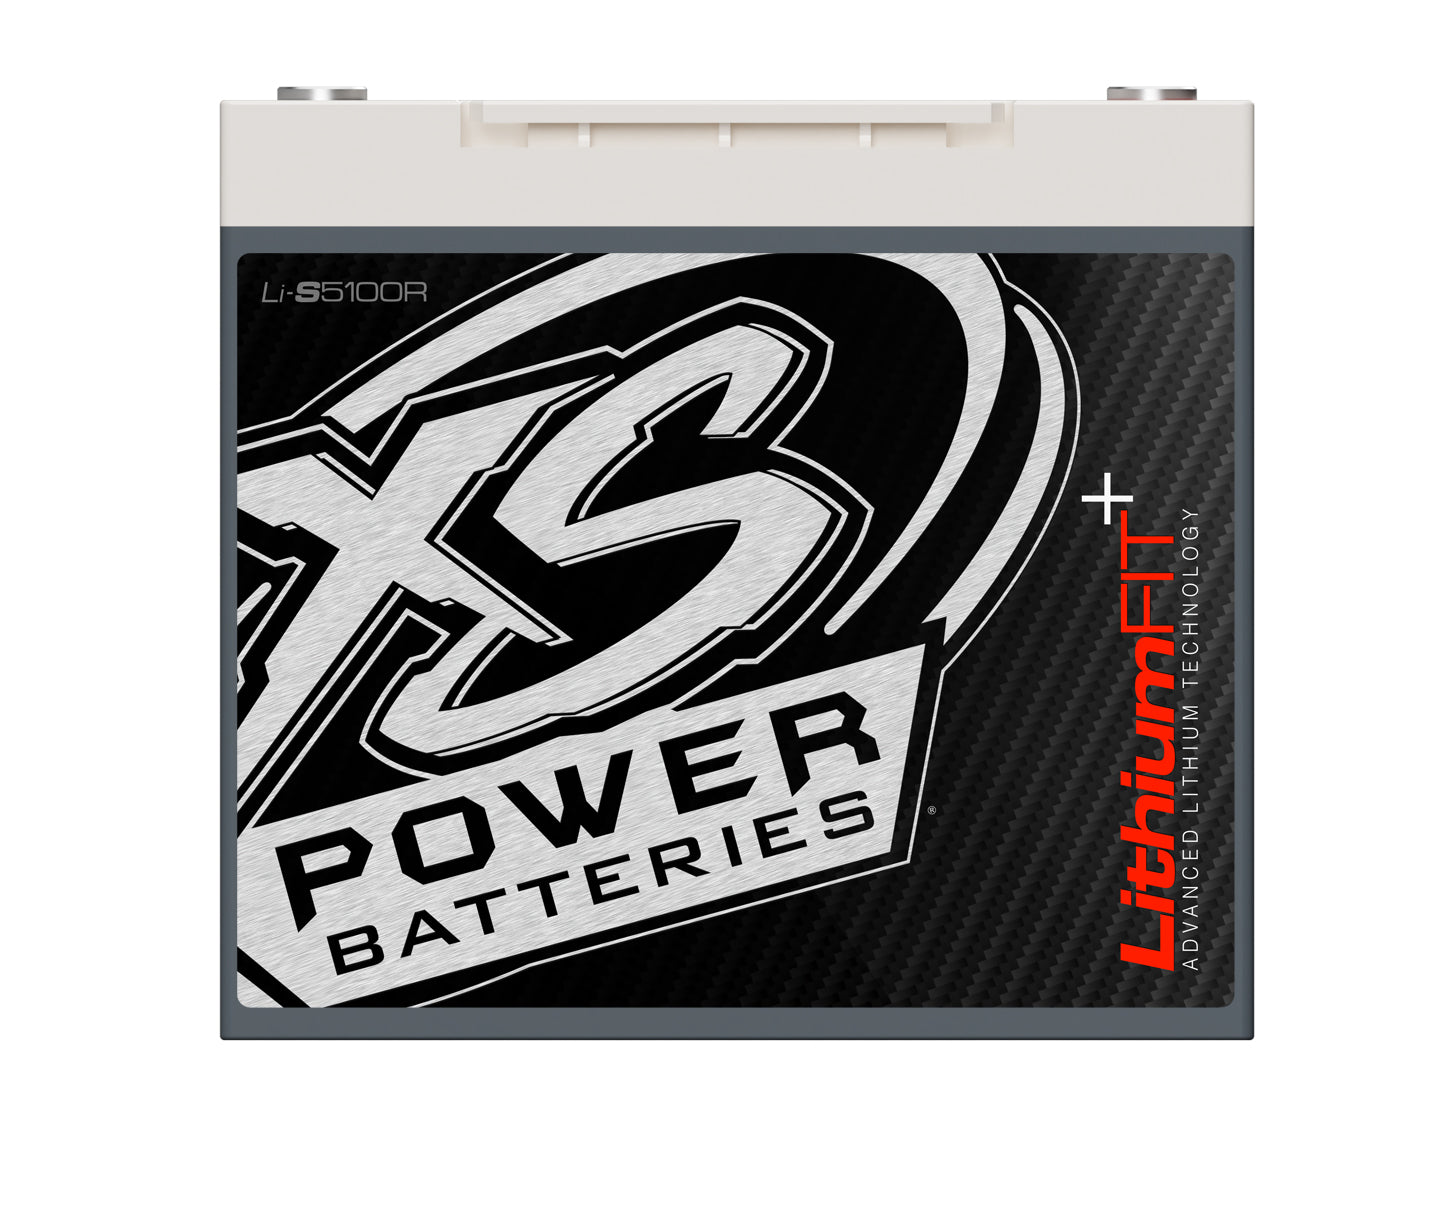 Li-S5100R XS Power 12VDC Lithium Racing Battery 3840A 41.6Ah Group 51R